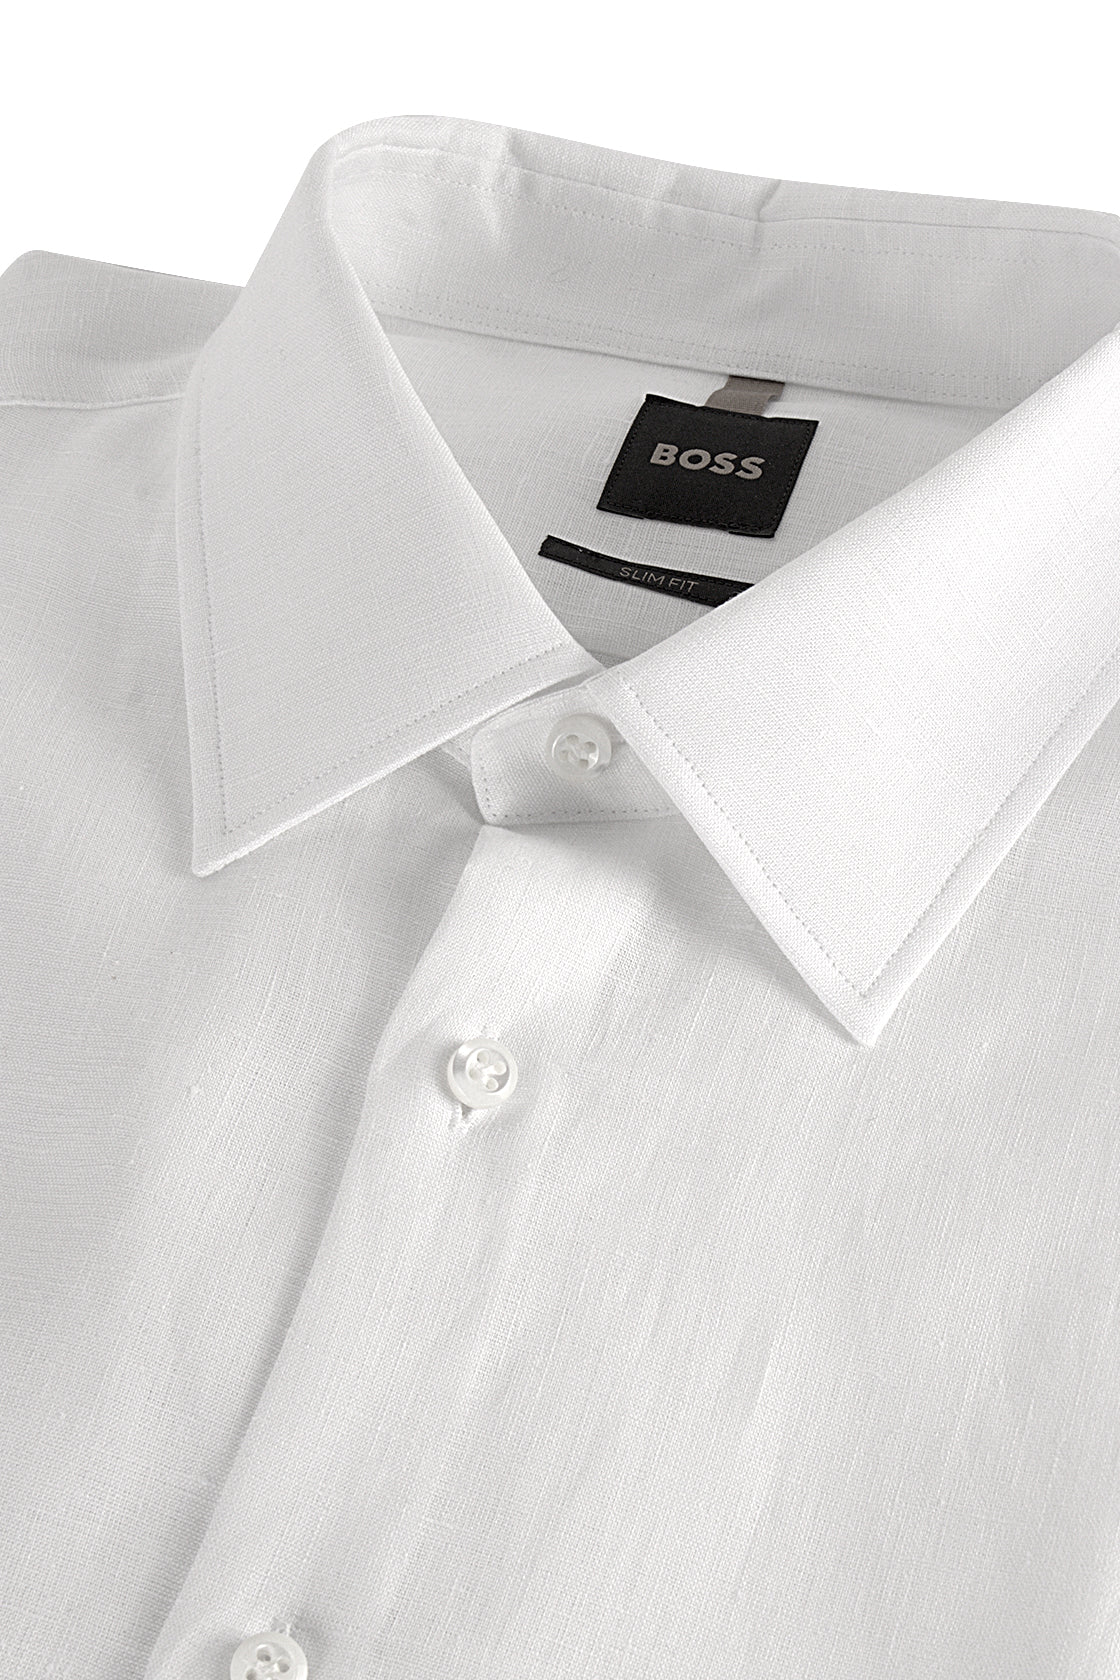 Hugo Boss T-Hays Kent Shirt White